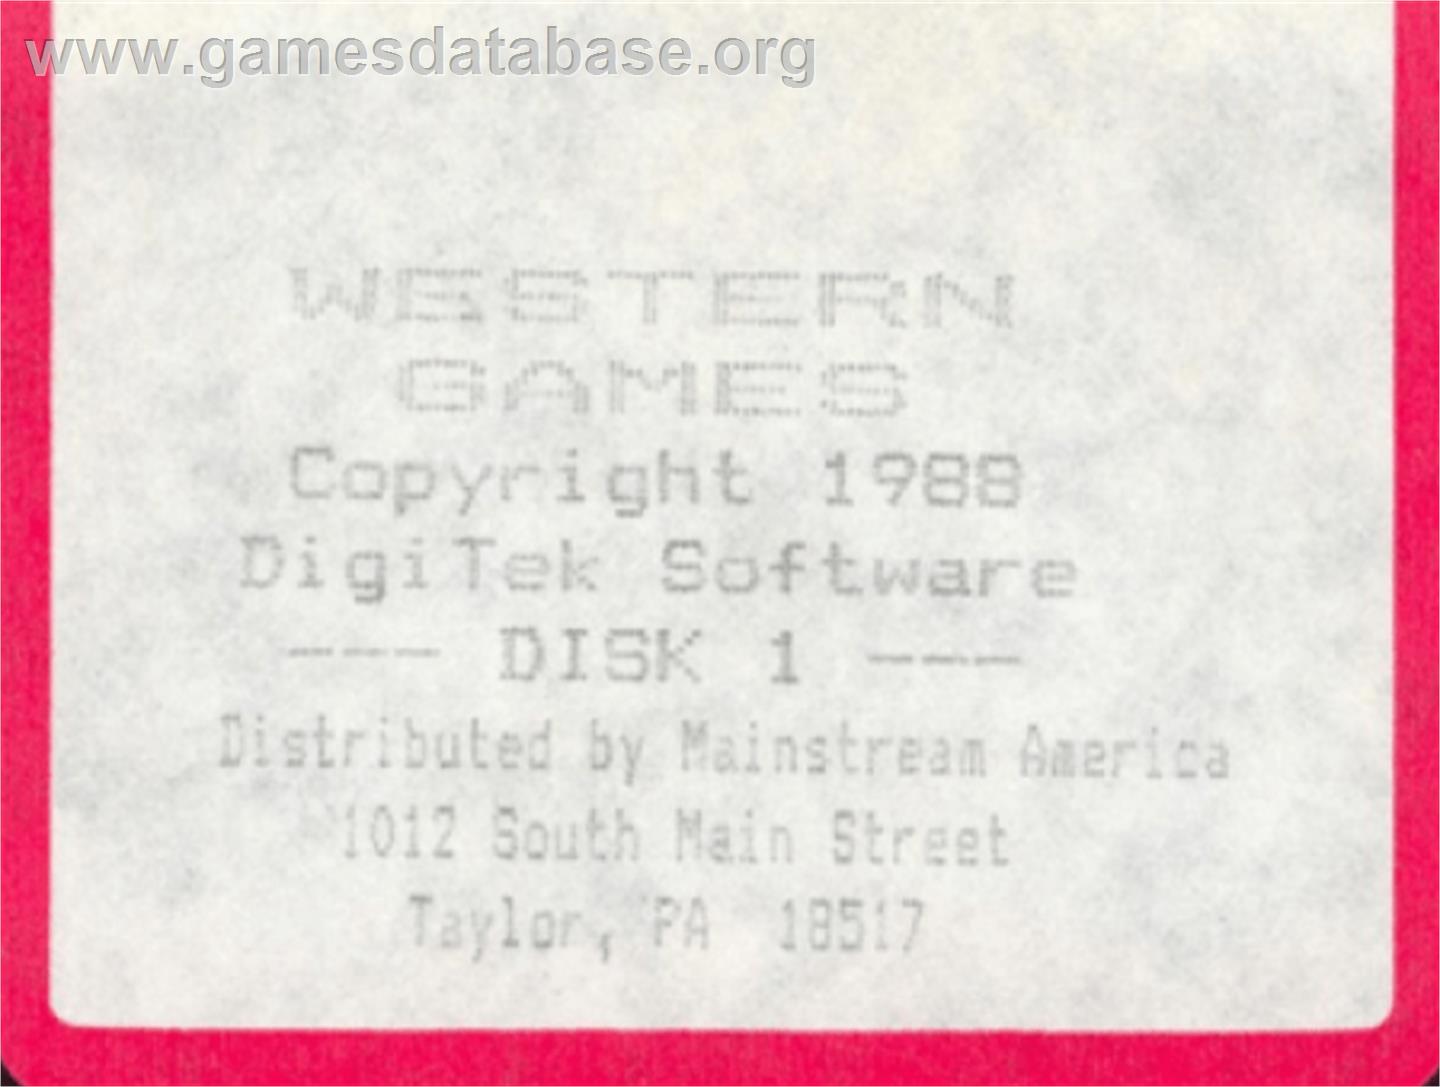 Western Games - Commodore Amiga - Artwork - Cartridge Top